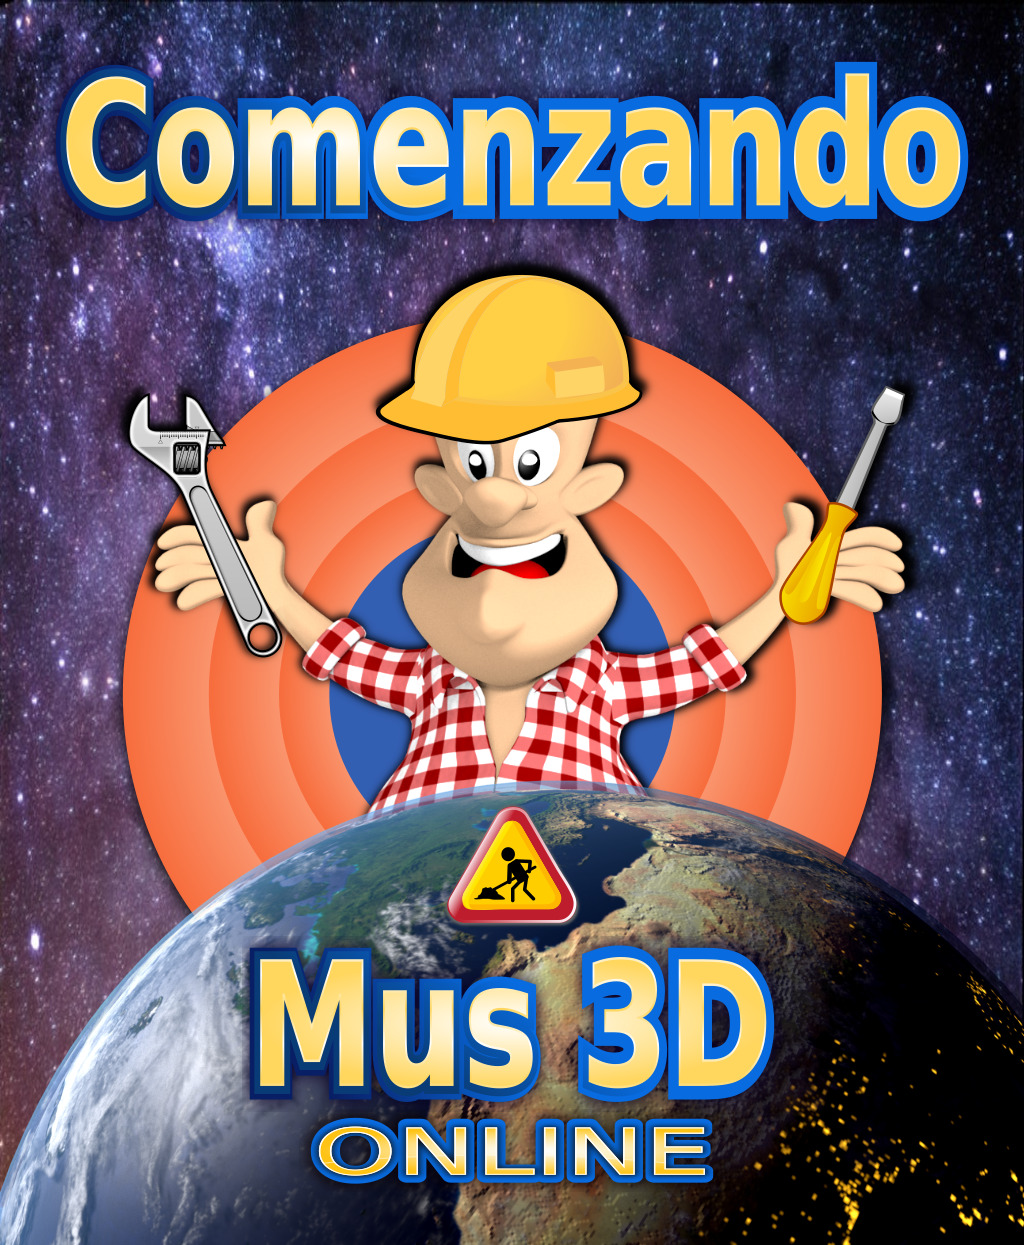 Comenzando Mus 3D Online